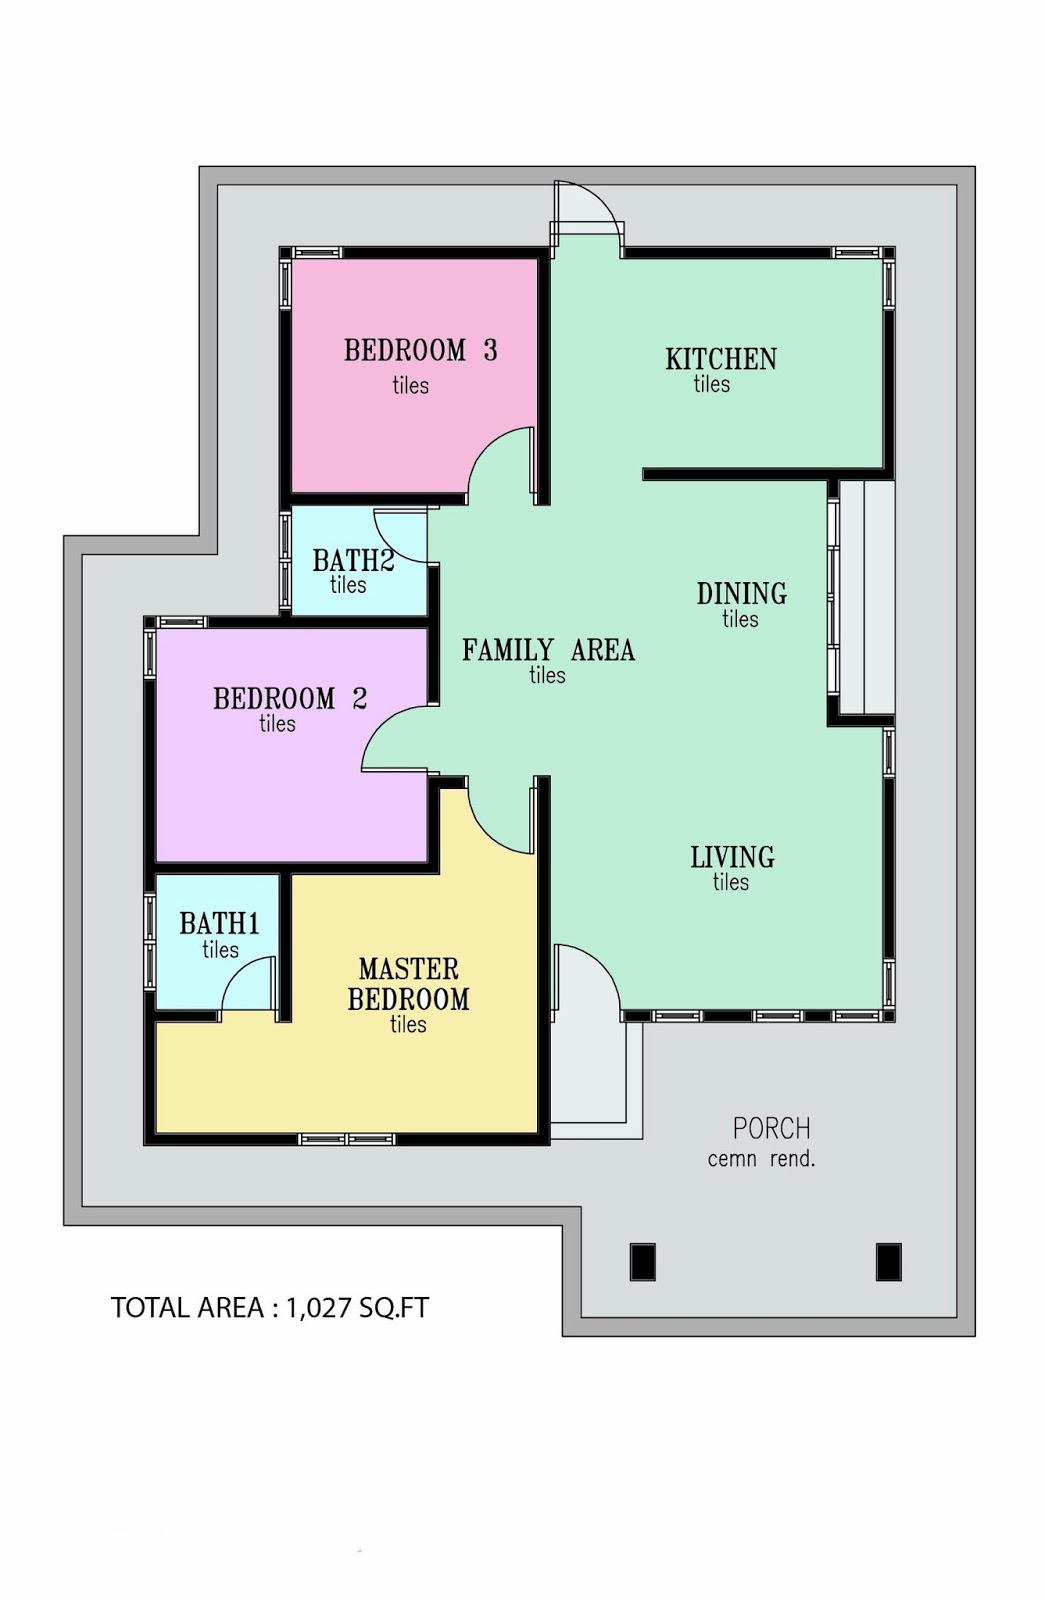 Plan Lantai Rumah 4 Bilik - 5 Bilik Tidur | Bungalow house plans, Home